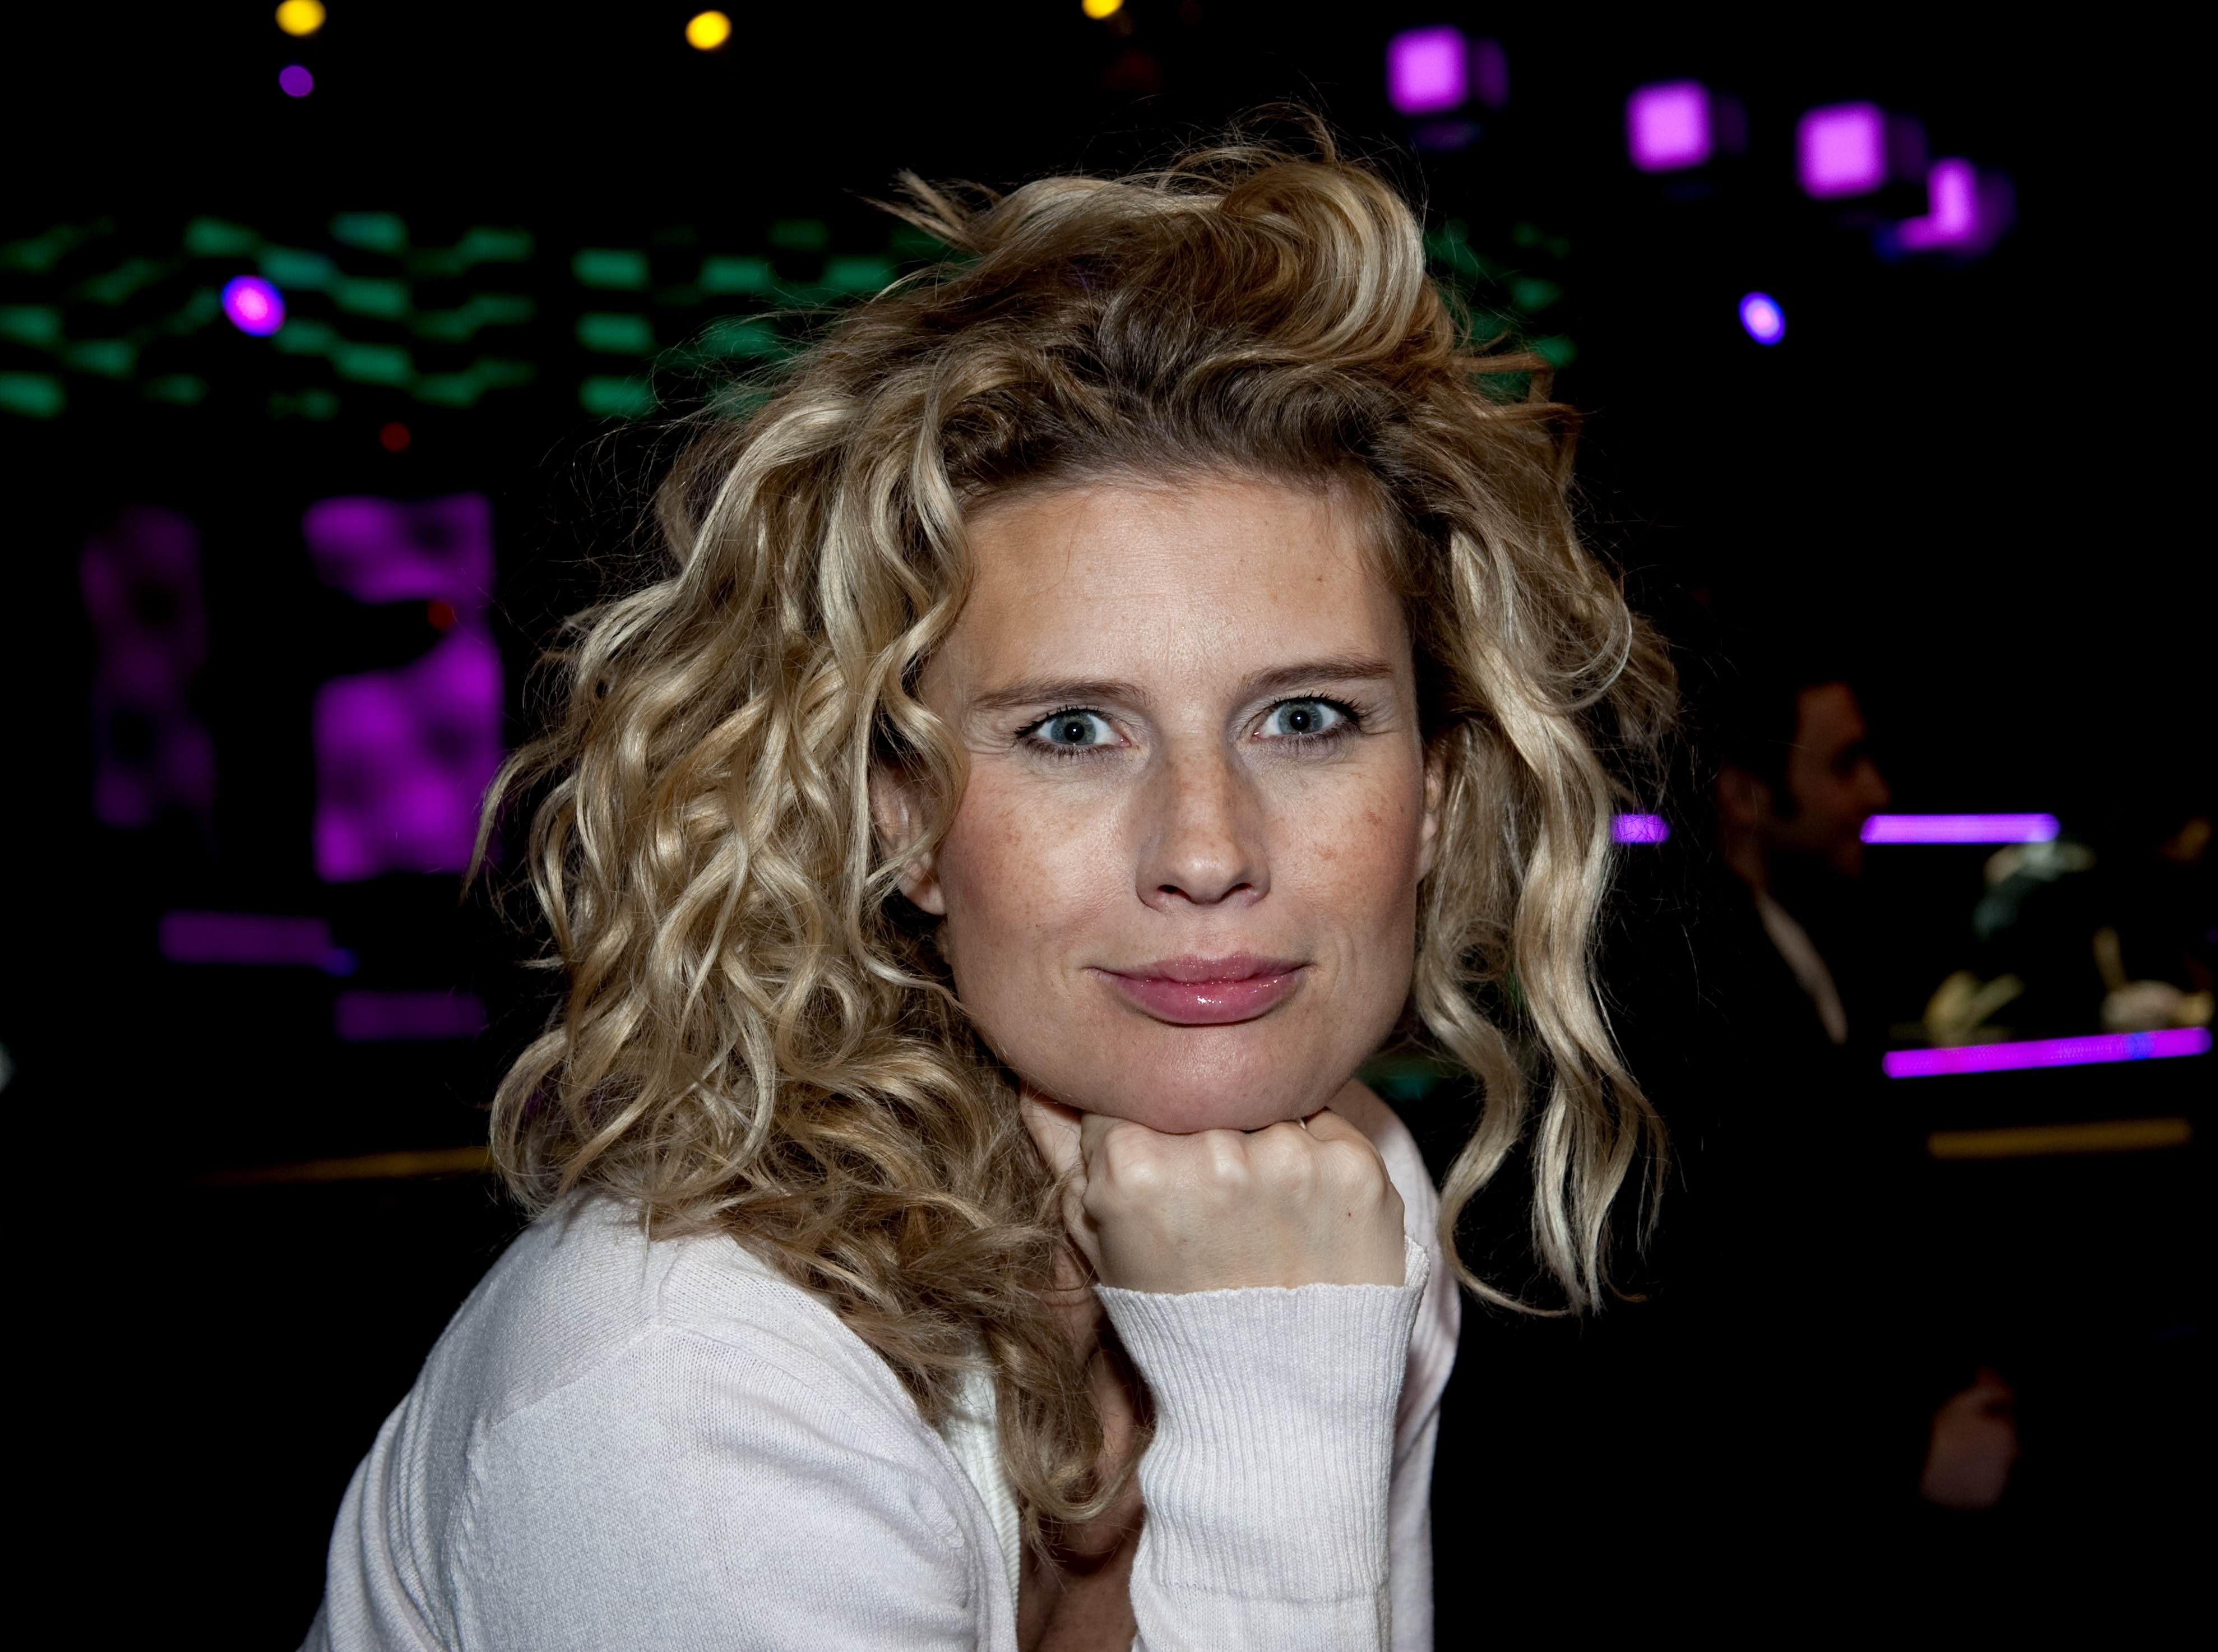 Christine Meltzer, Eurovision Song Contest 2010, Melodifestivalen 2010, Anna Bergendahl